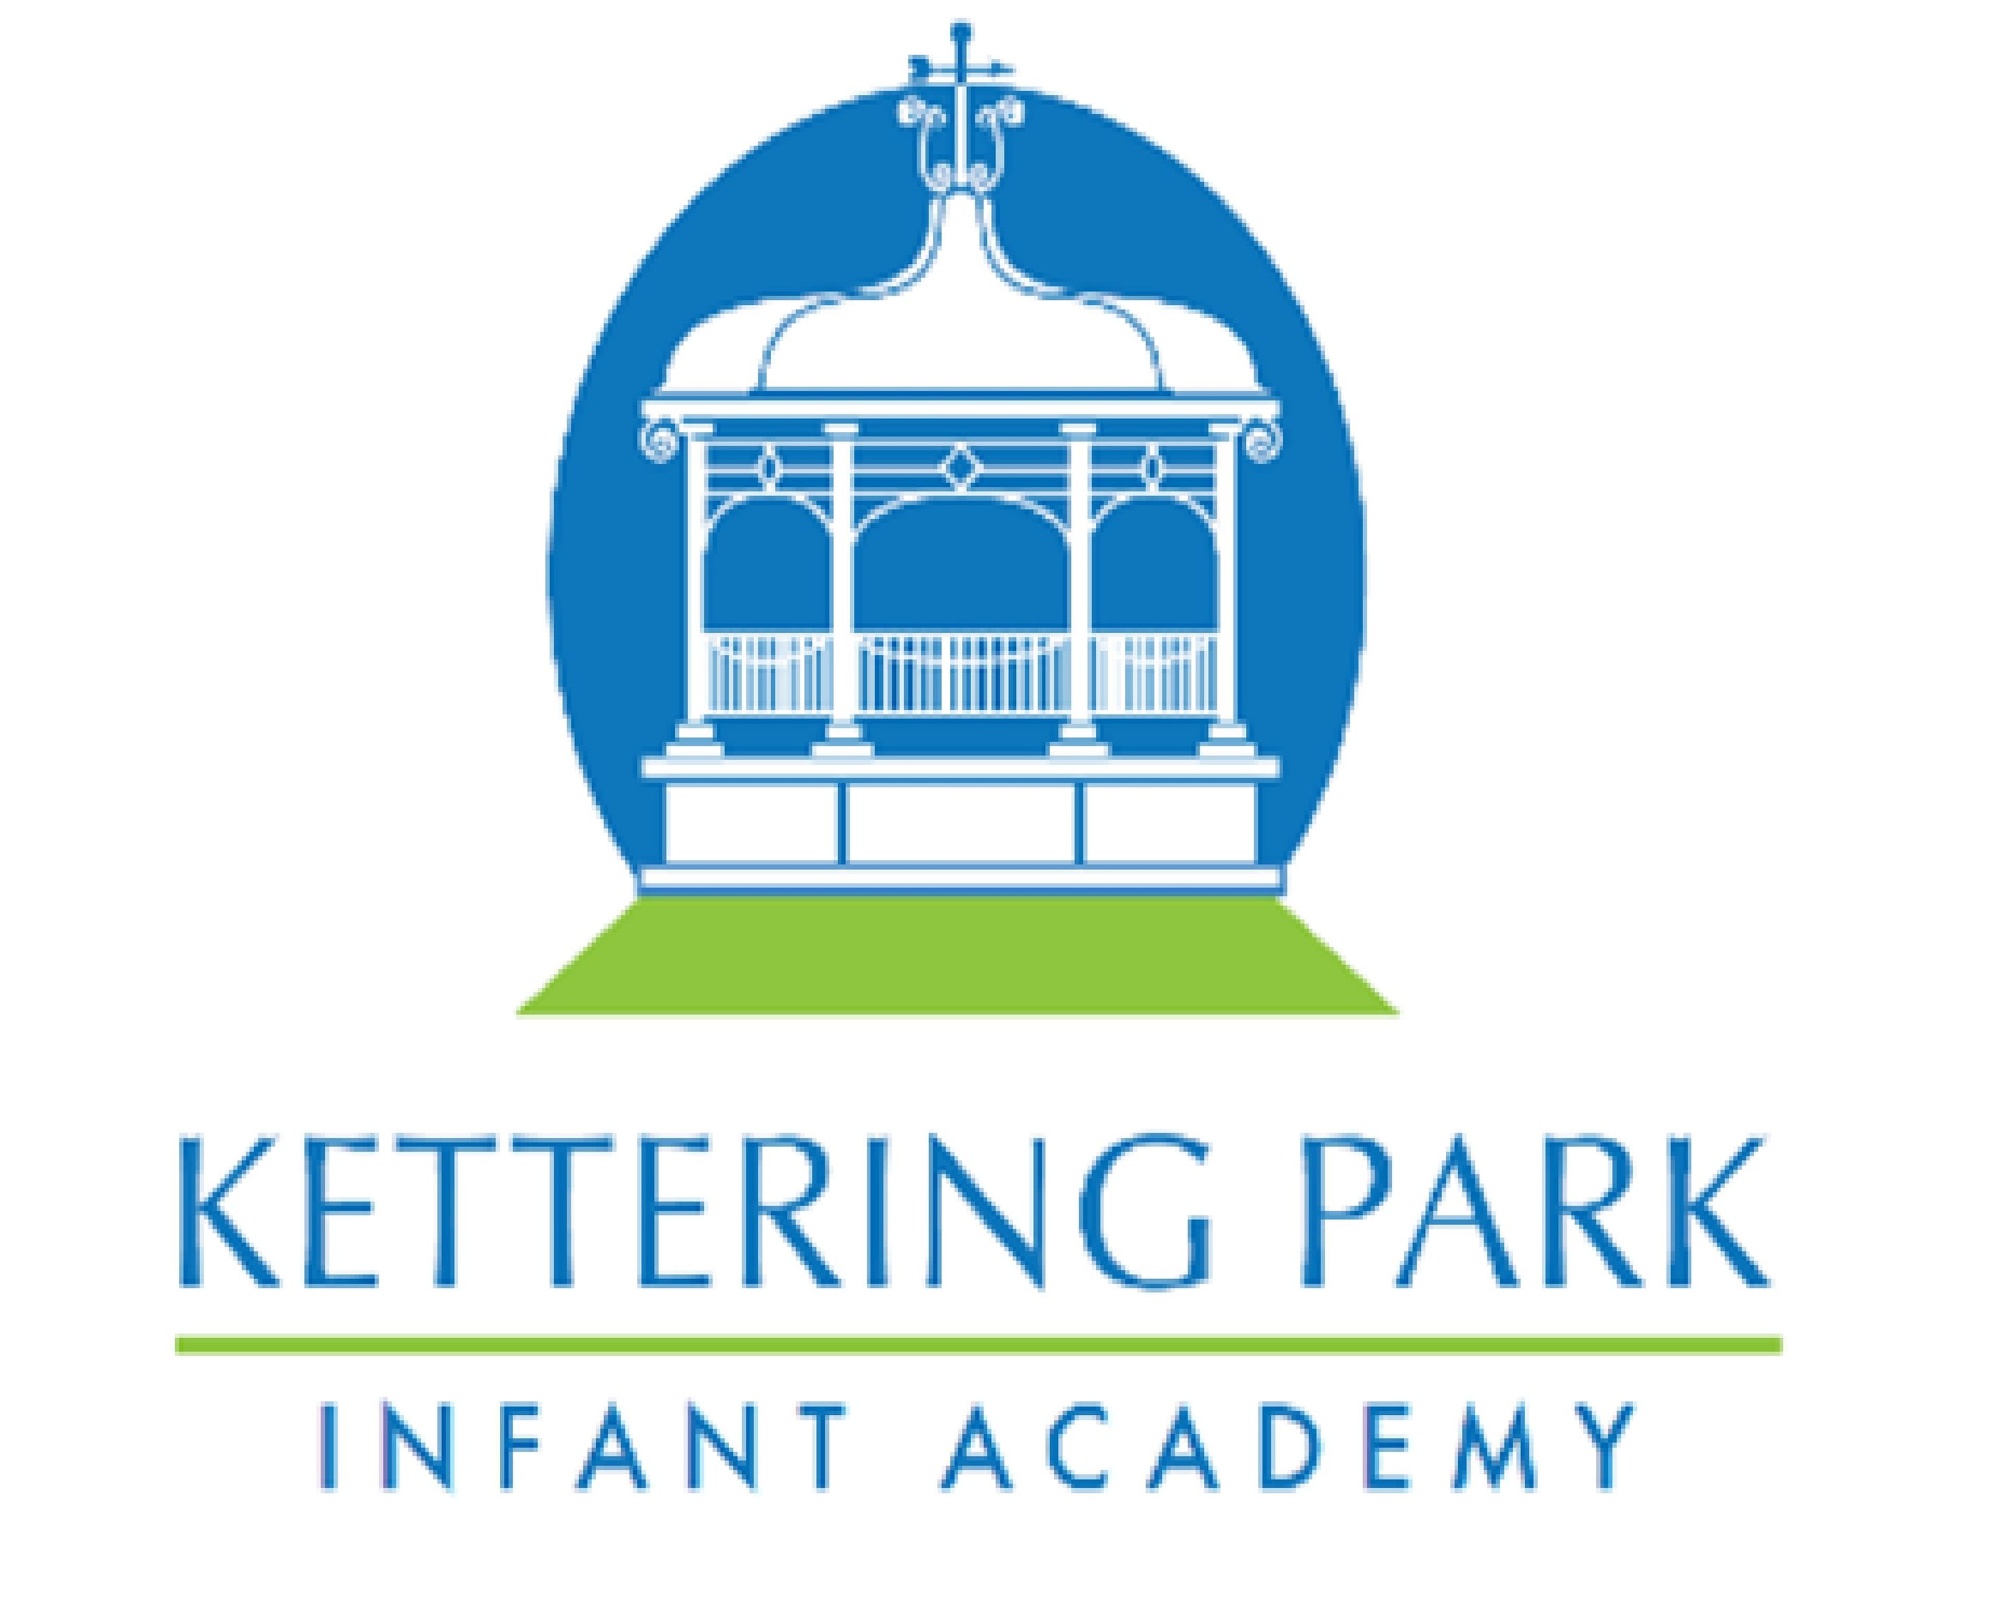 Kettering Park Infant Academy